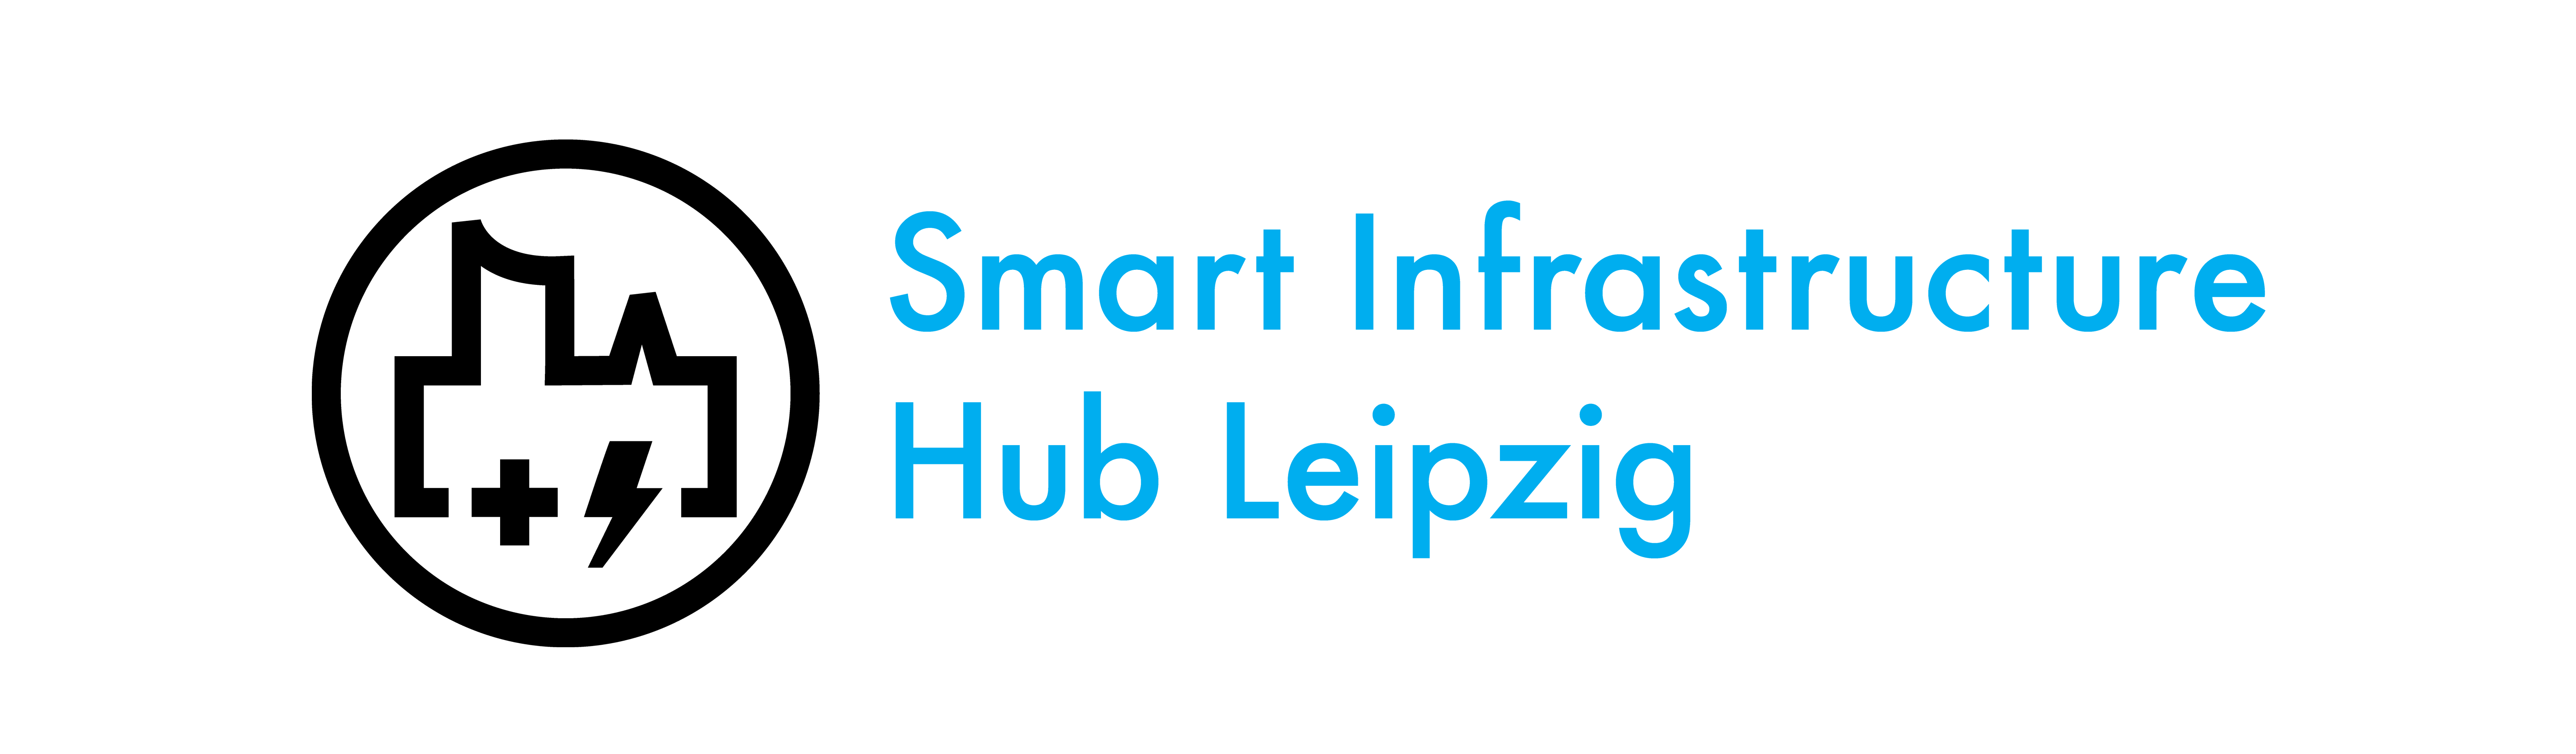 smart_infrastructure_hub_logo2